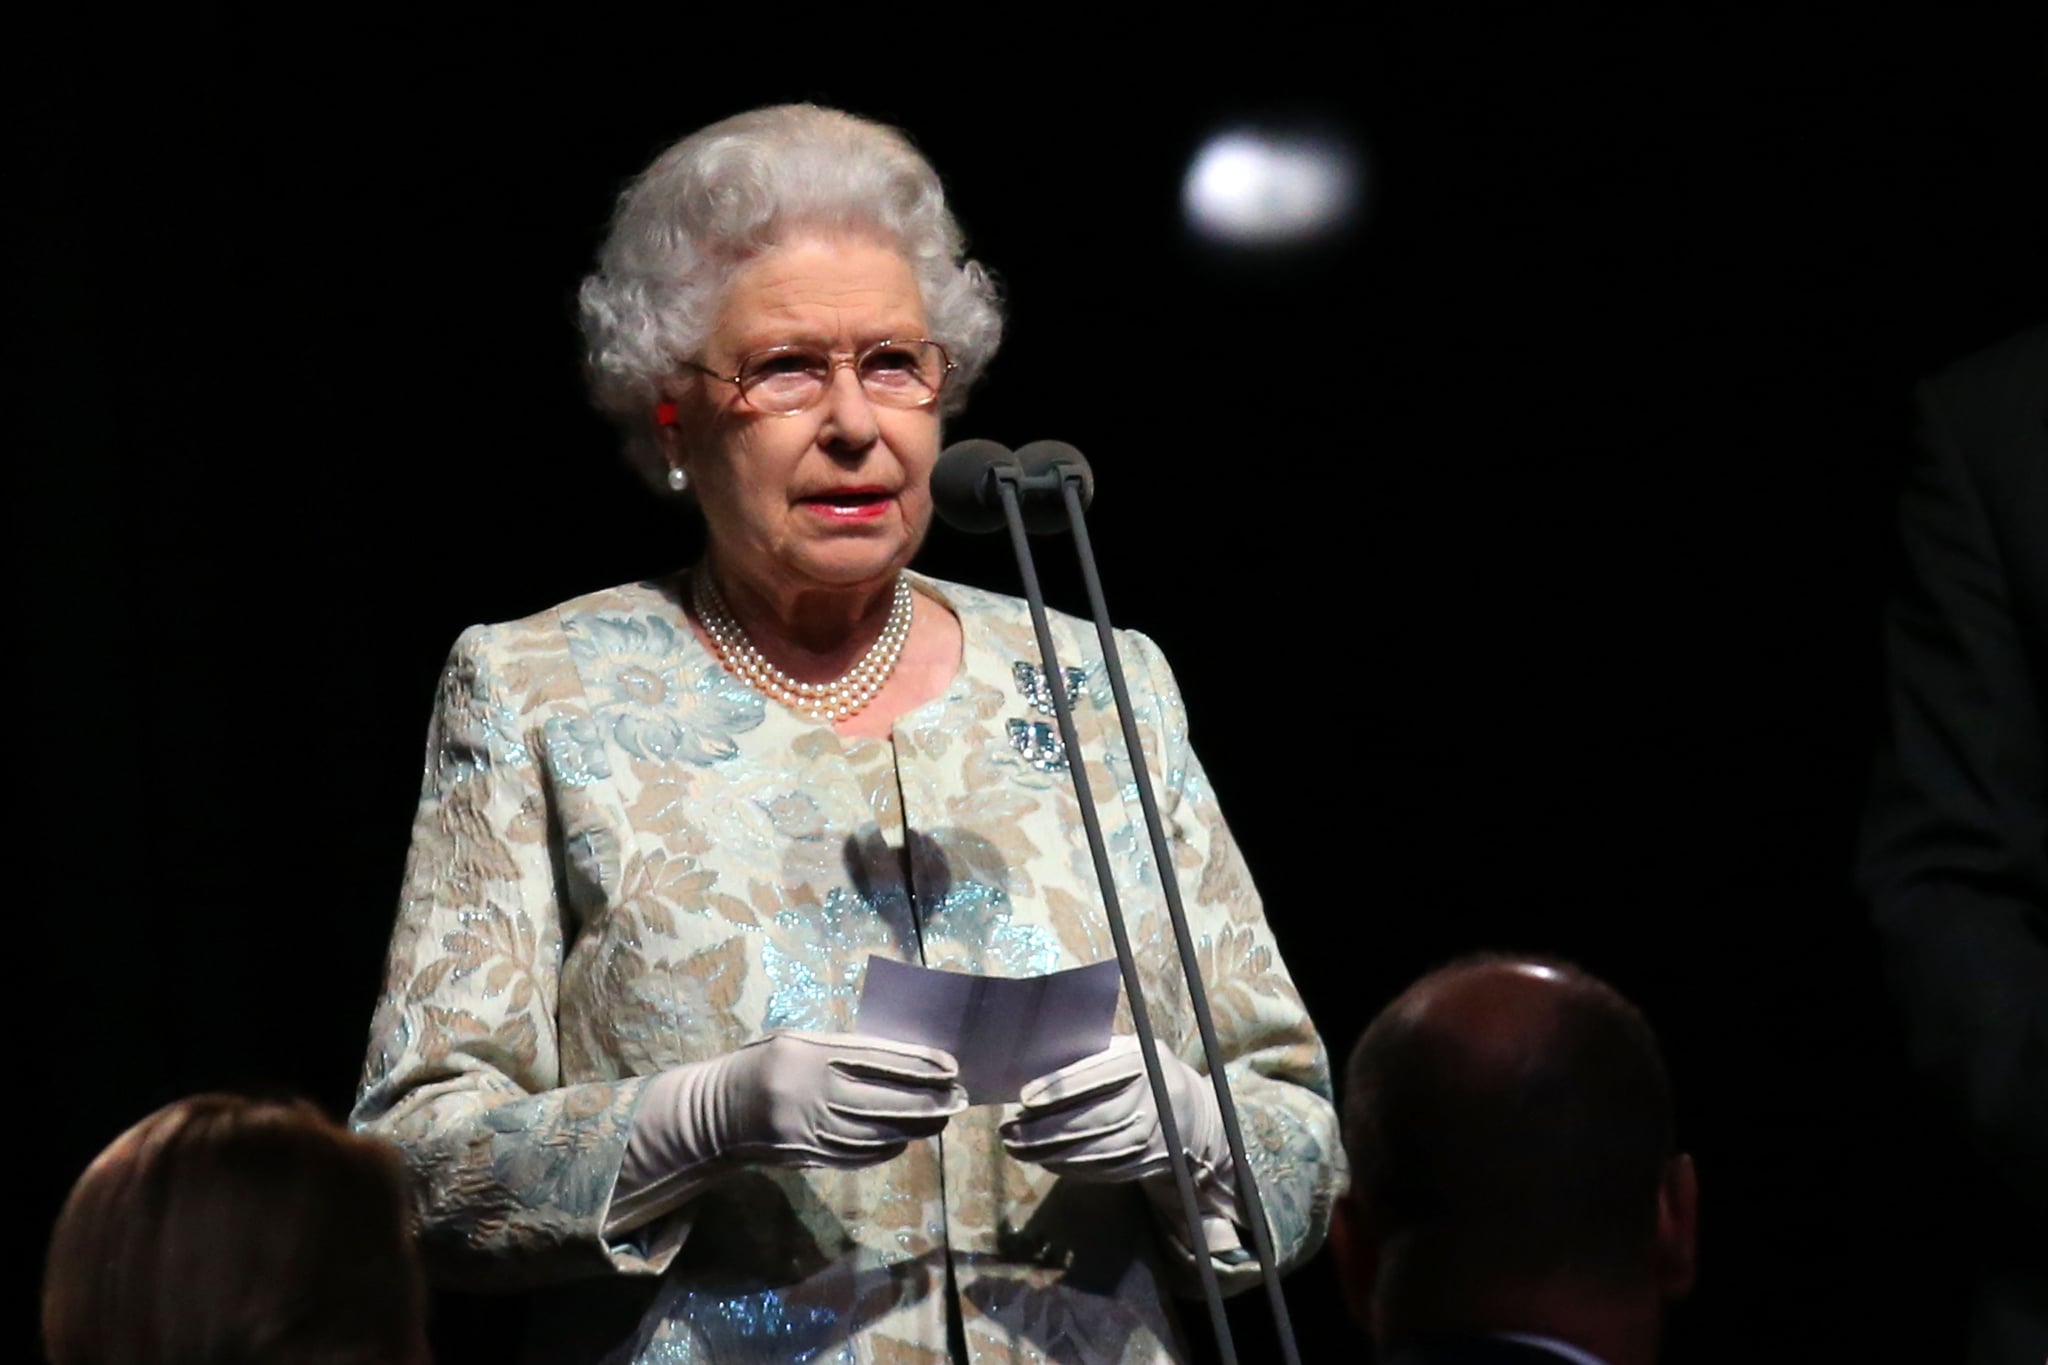 Queen Elizabeth II opens the Paralympic Games in London in 2012